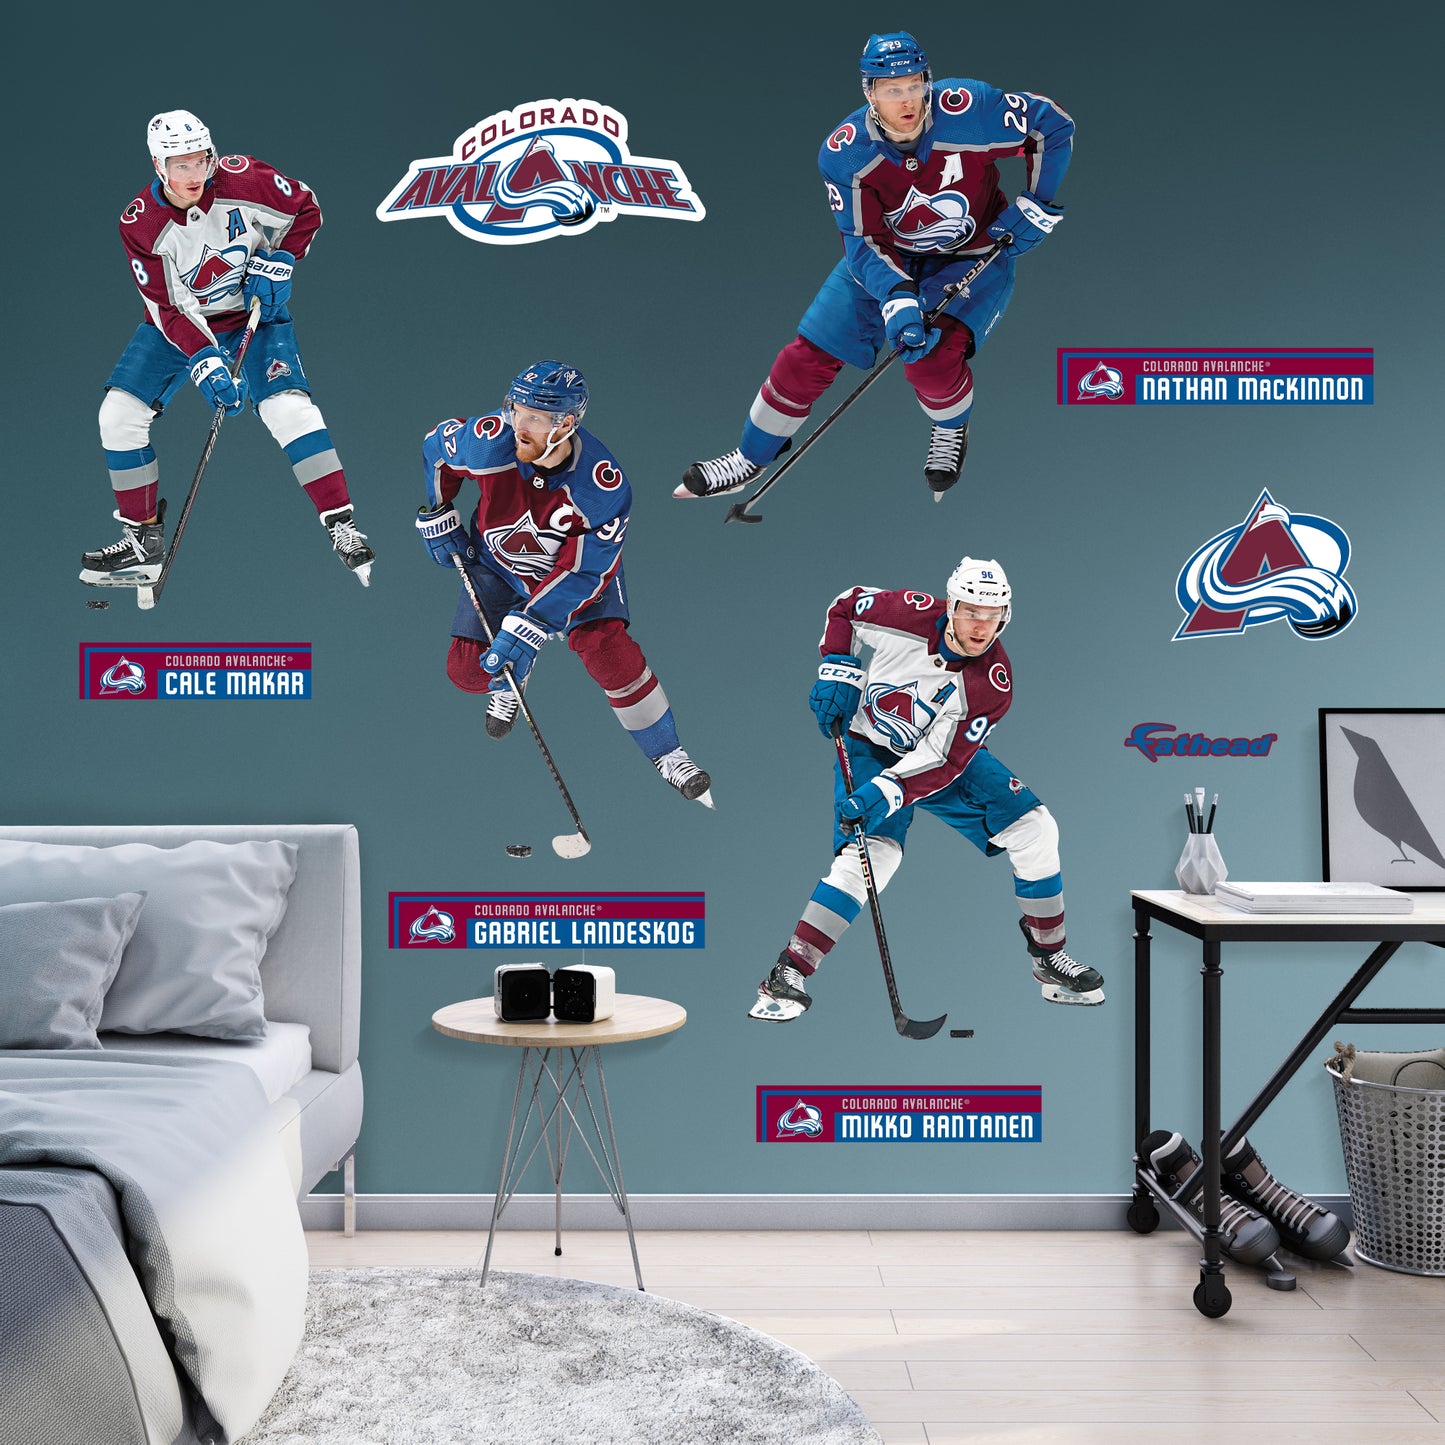 Cale makar  Colorado avalanche hockey, Nhl wallpaper, Nhl hockey teams